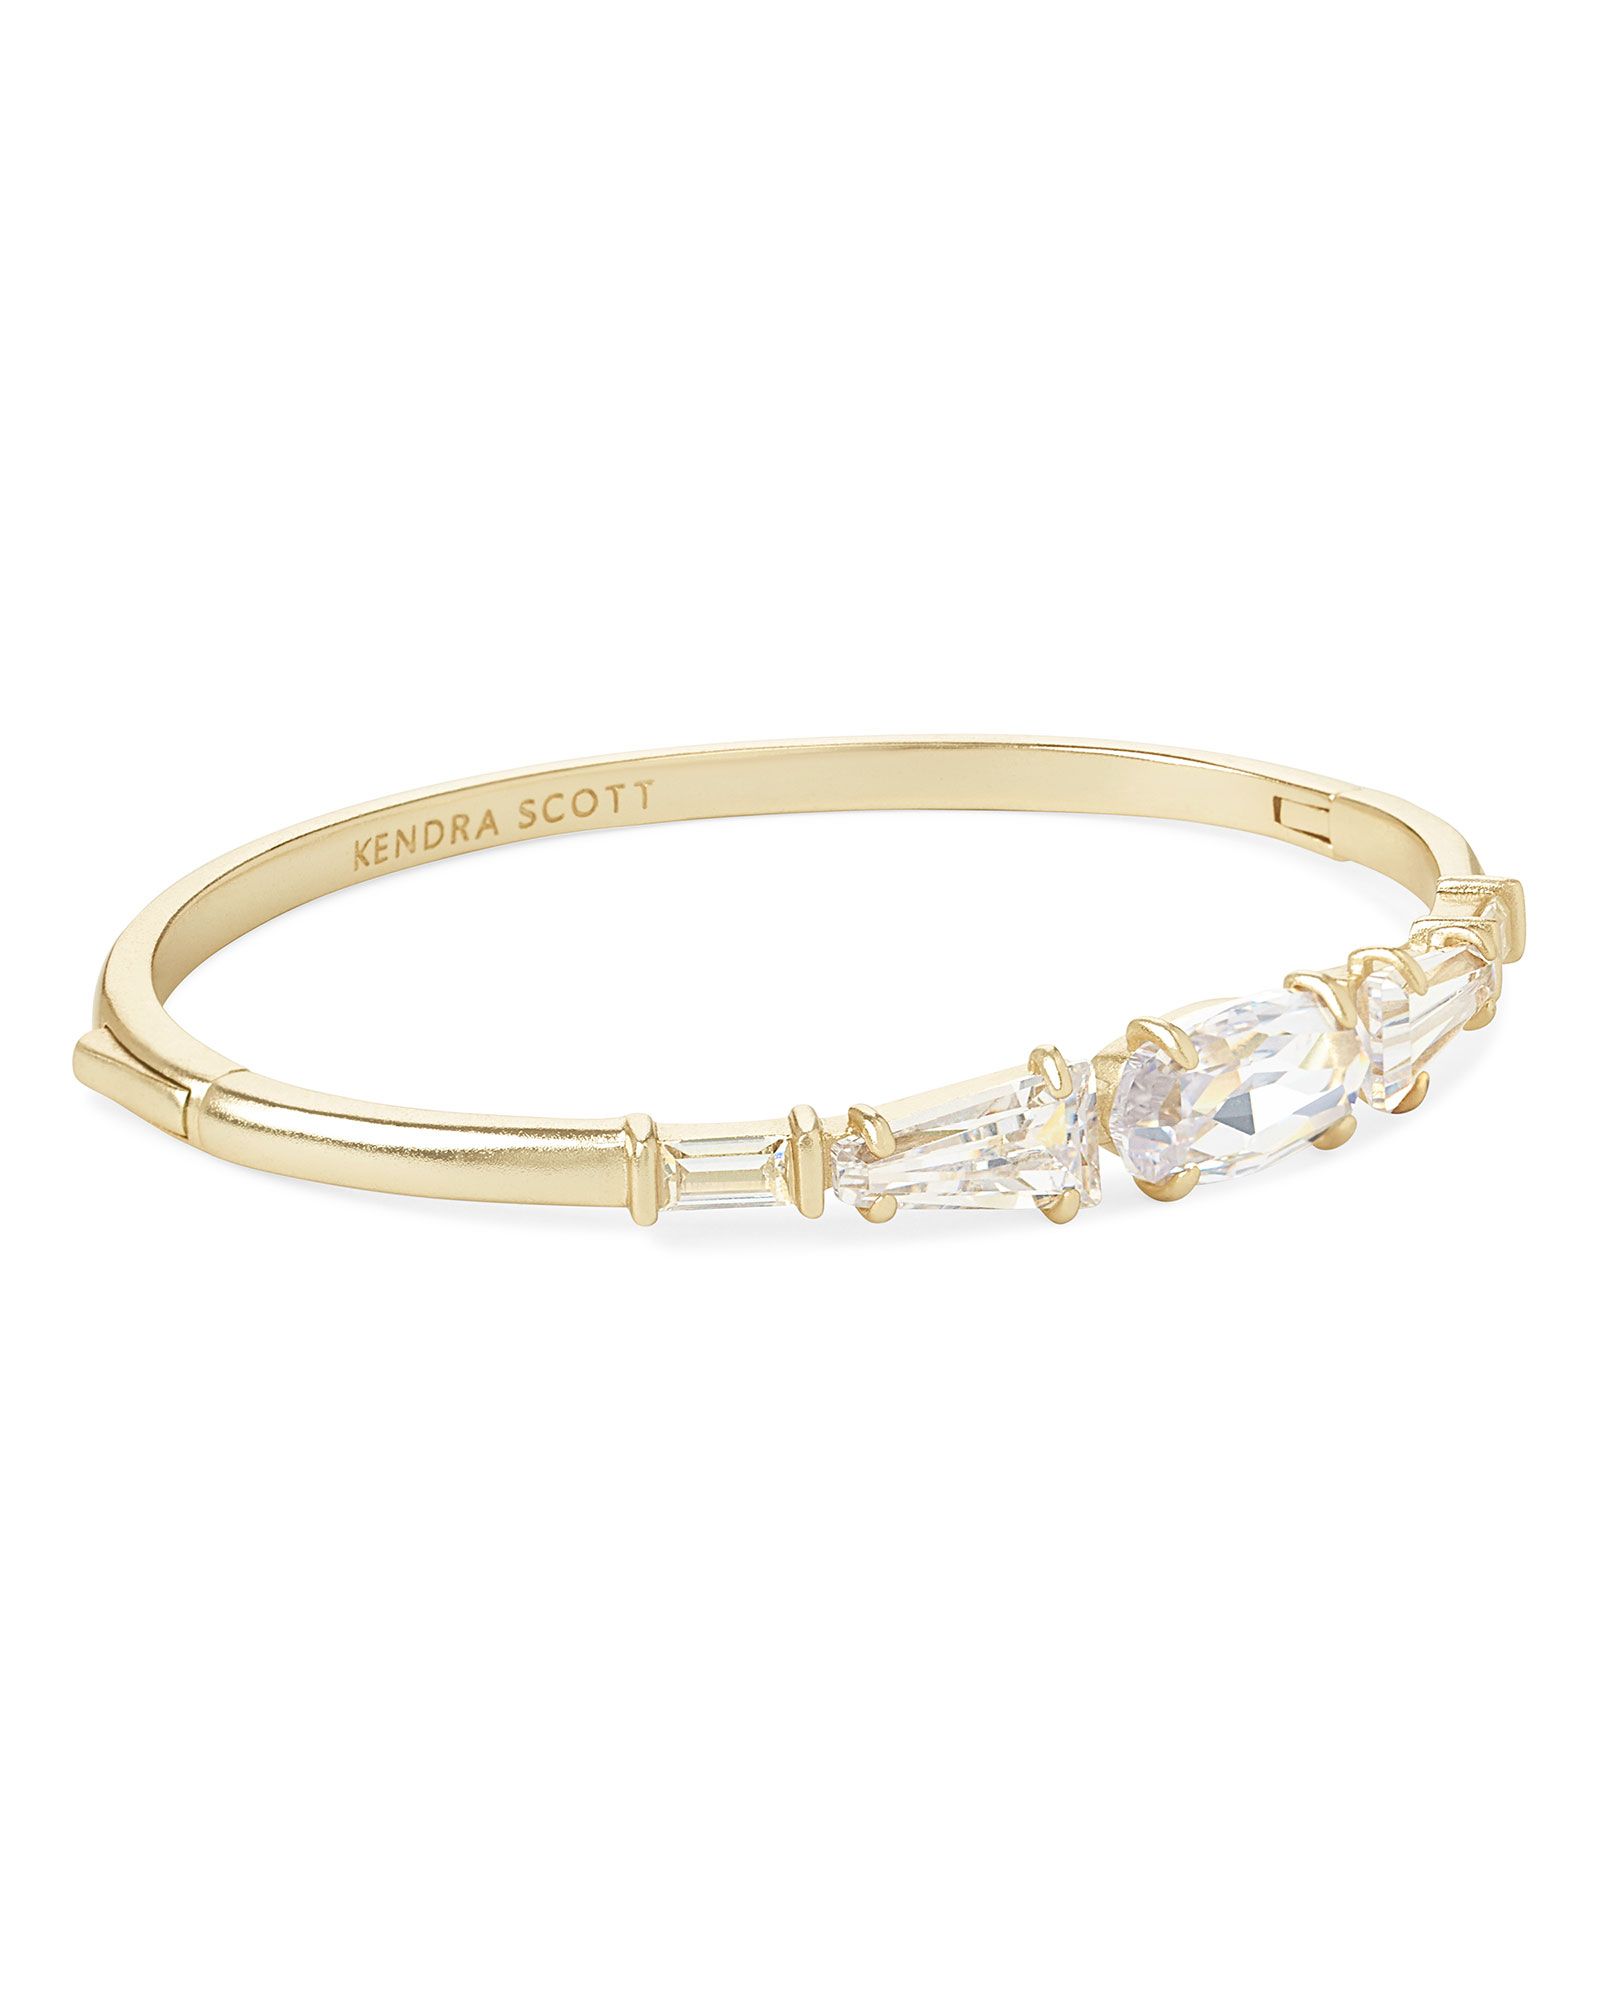 Ren Gold Cuff Bracelet in Lustre Glass | Kendra Scott